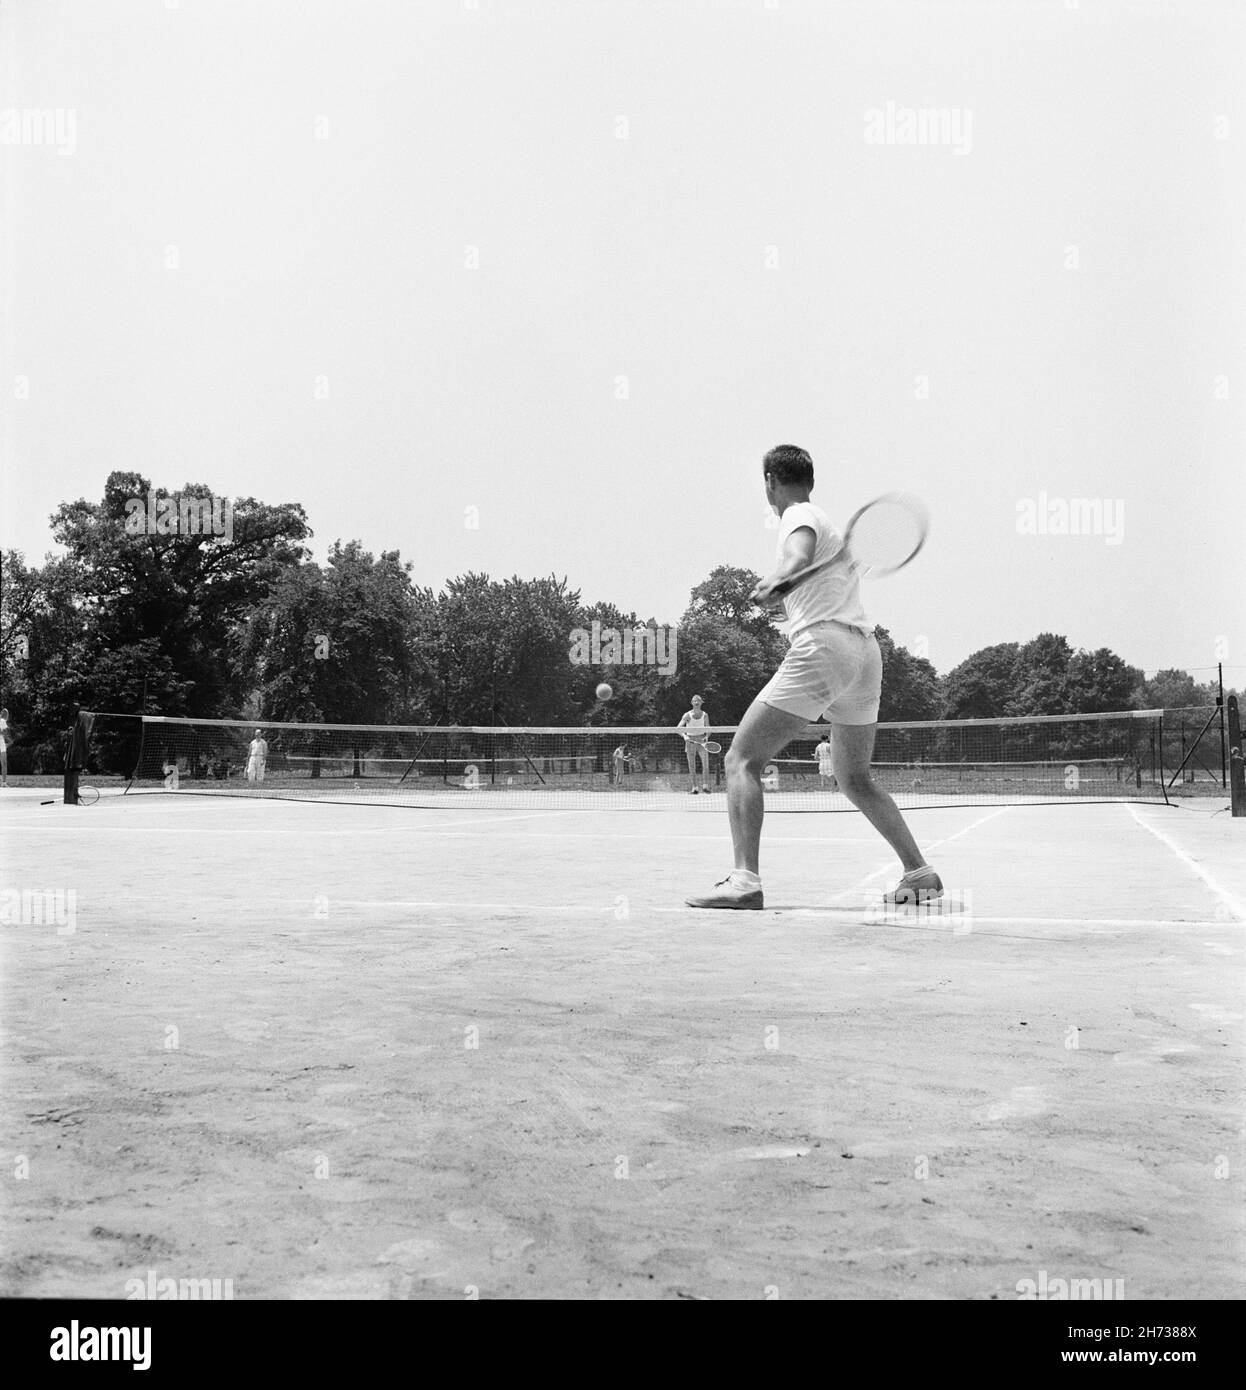 Zwei Männer spielen Tennis, Fairmont Park, Philadelphia, Pennsylvania, USA, Jack Delano, U.S. Farm Security Administration, U.S. Office of war Information Photograph Collection, Juli 1943 Stockfoto